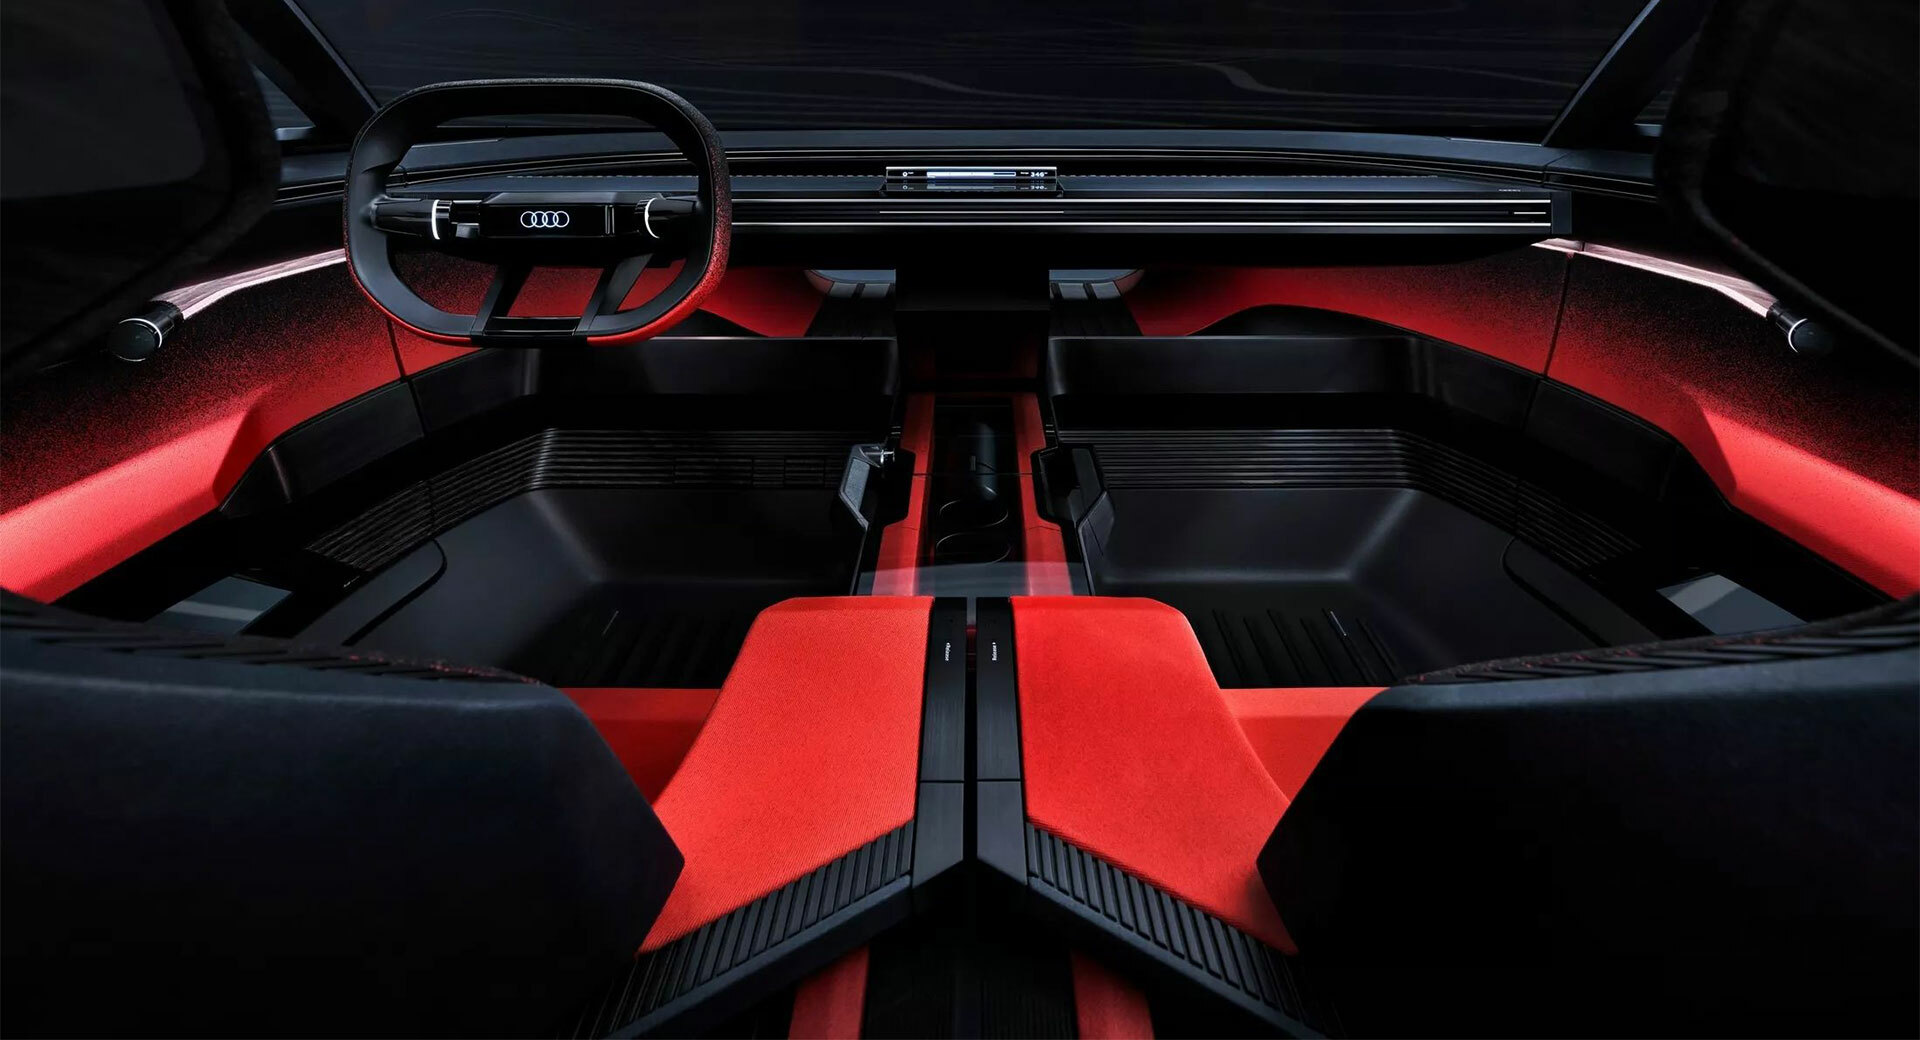 Audi Design Boss Says Interiors Of New